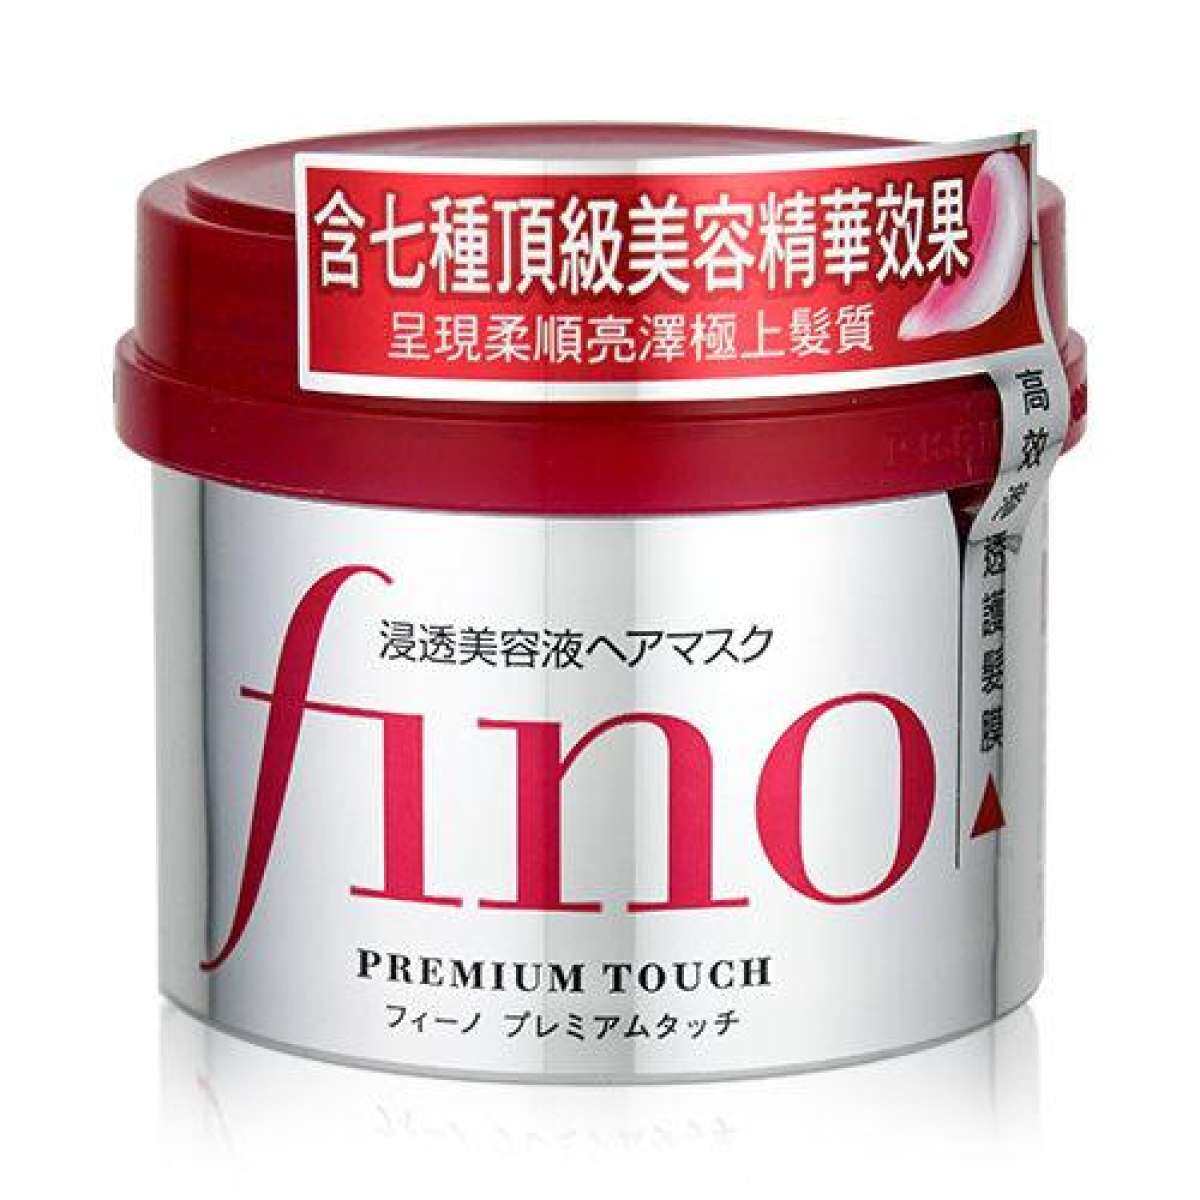 Shiseido fino. Shiseido fino Premium Touch. Краска для волос шисейдо. Shiseido professional маска для волос. Маска для волос Тсубаки в золотой банке.